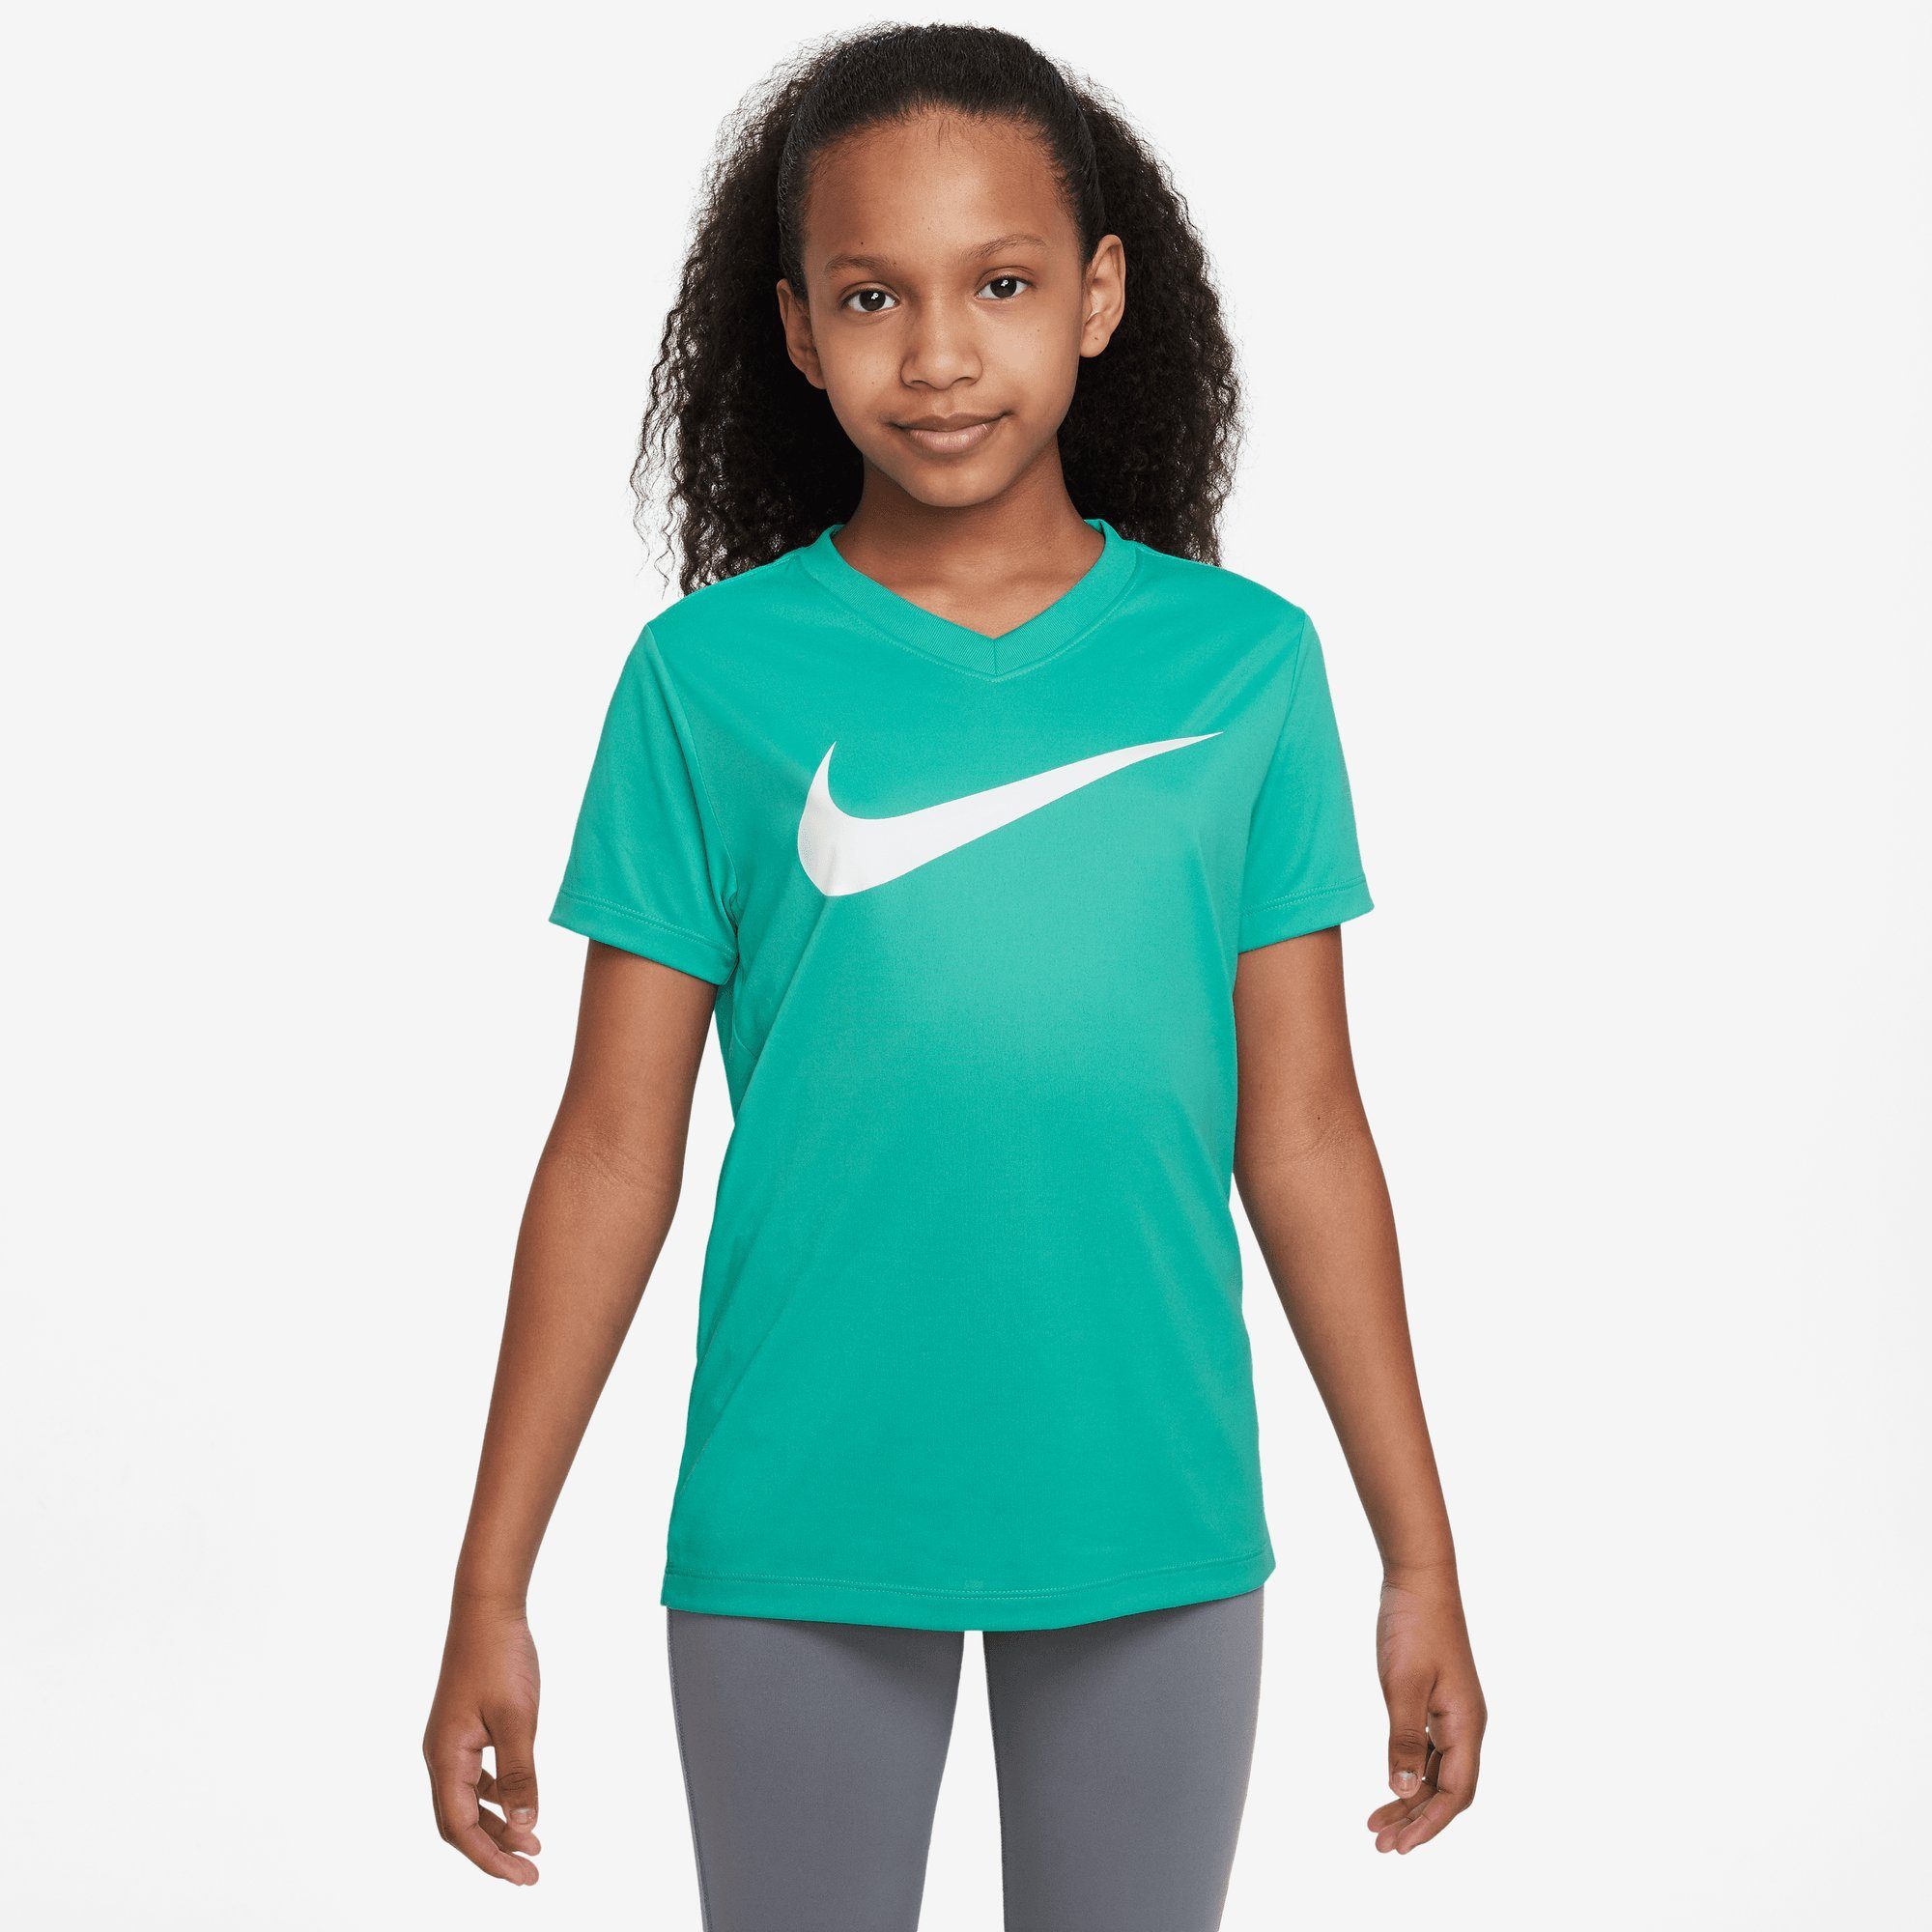 KIDS' (GIRLS) LEGEND Trainingsshirt JADE V-NECK CLEAR II BIG T-SHIRT DRI-FIT Nike TRAINING